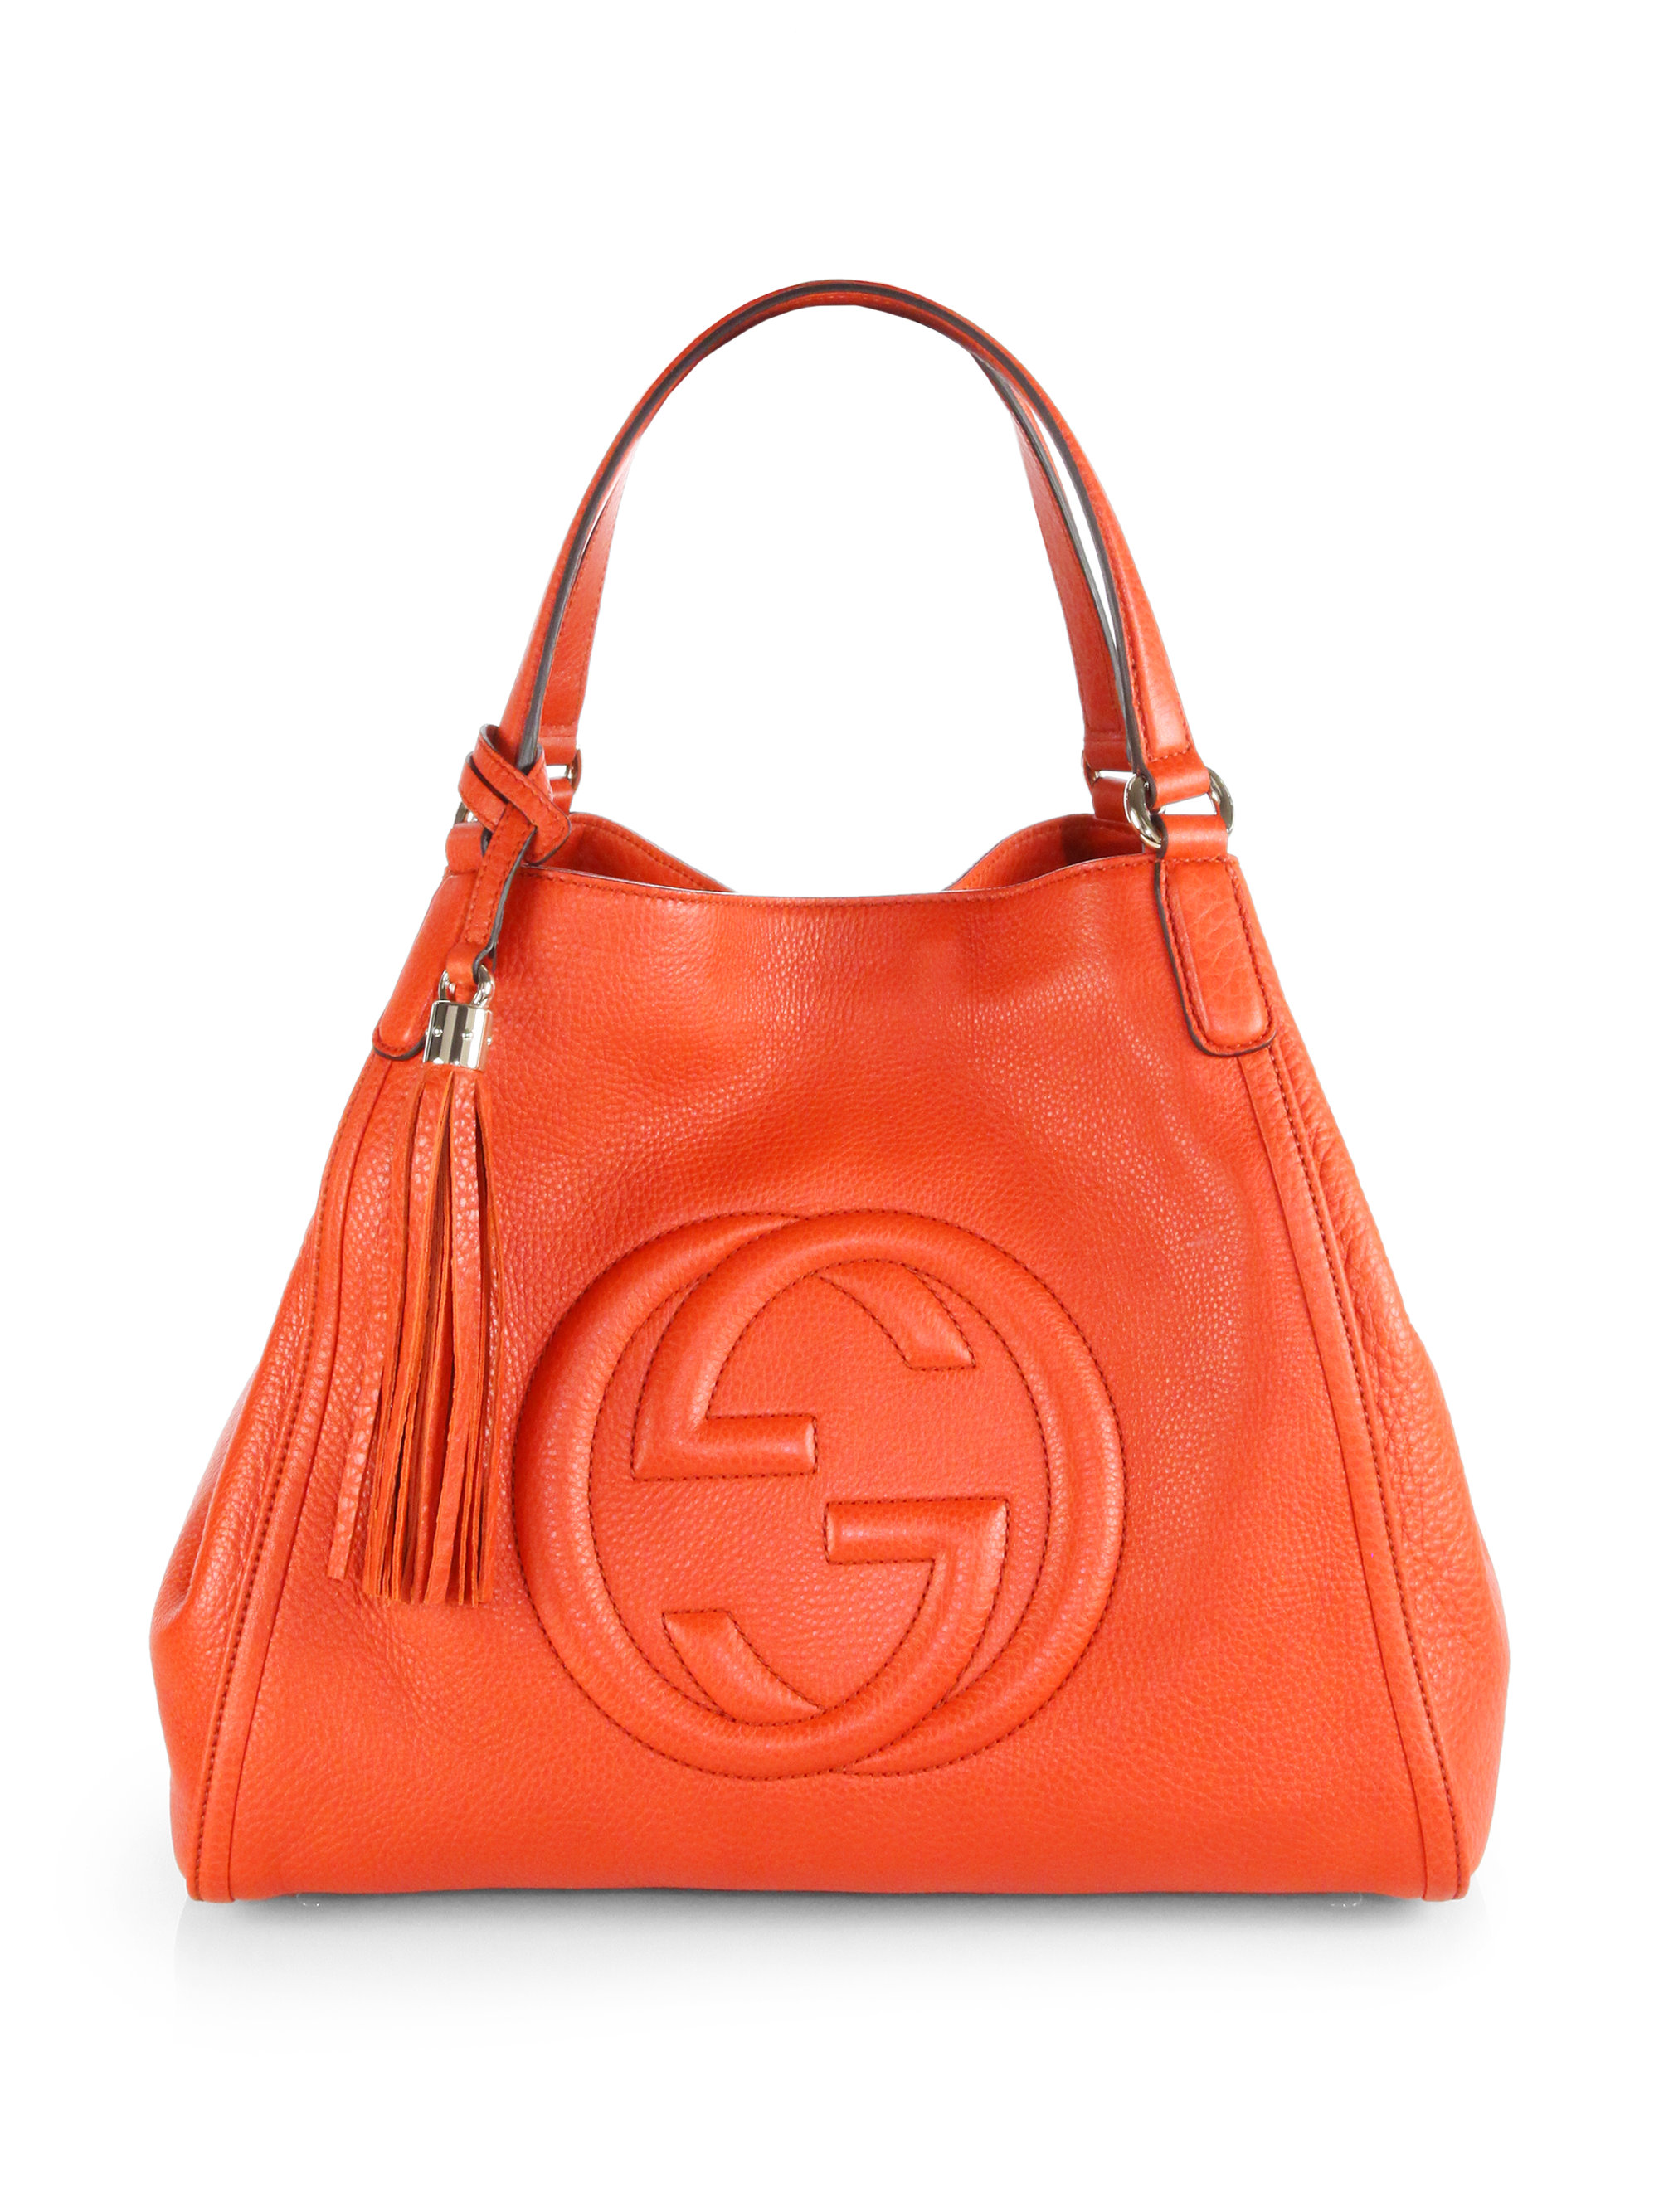 Lyst - Gucci Soho Medium Shoulder Bag in Orange